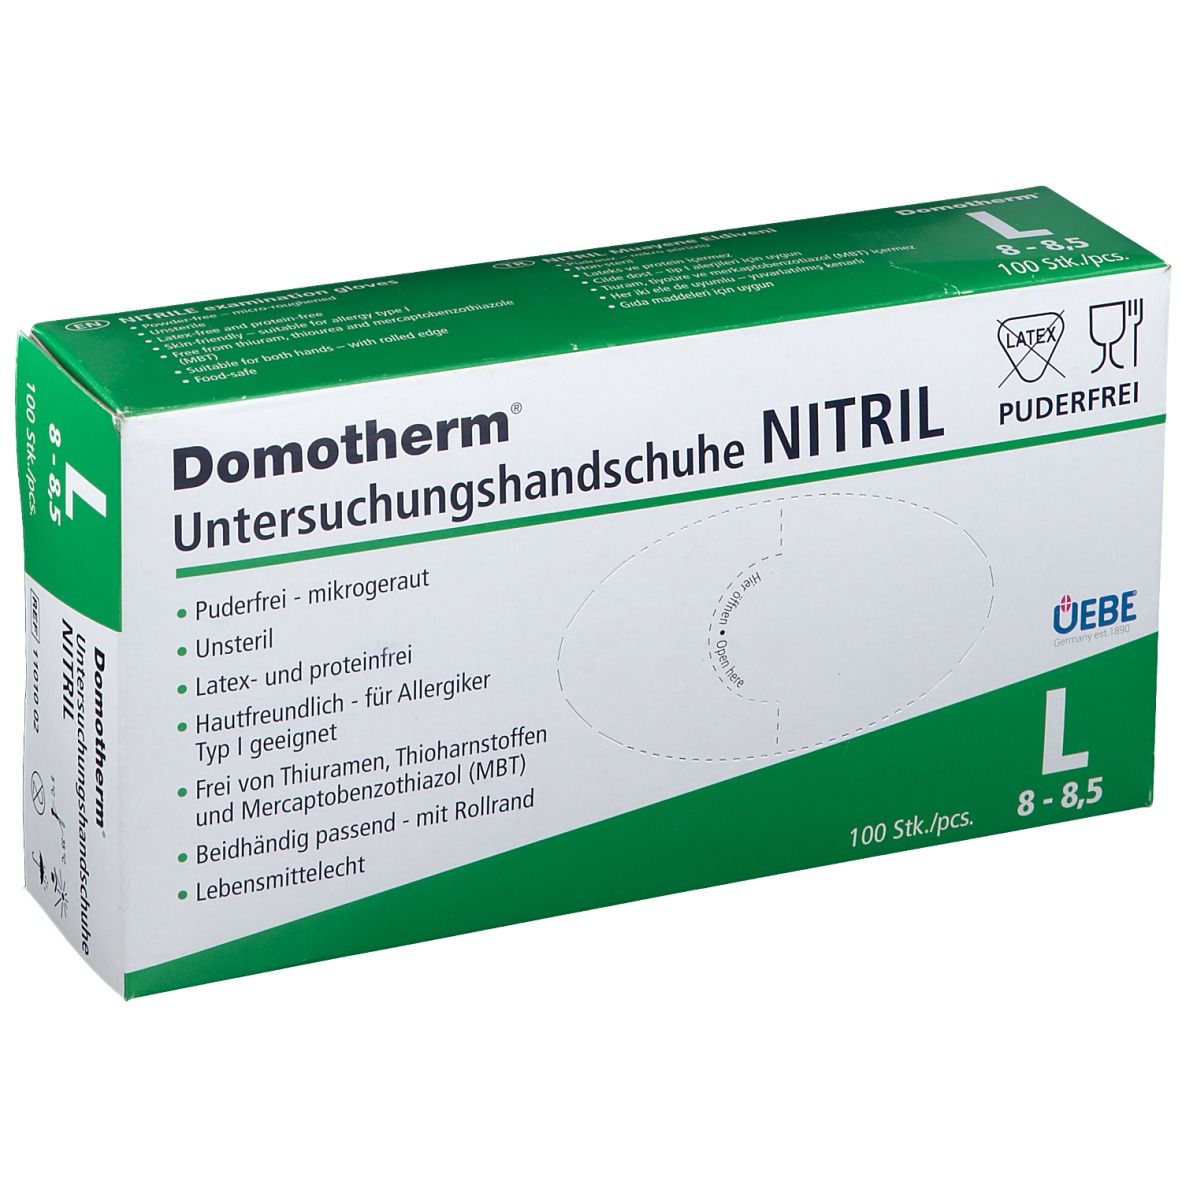 Domotherm® Untersuchungshandschuhe Nitril L 8-8,5